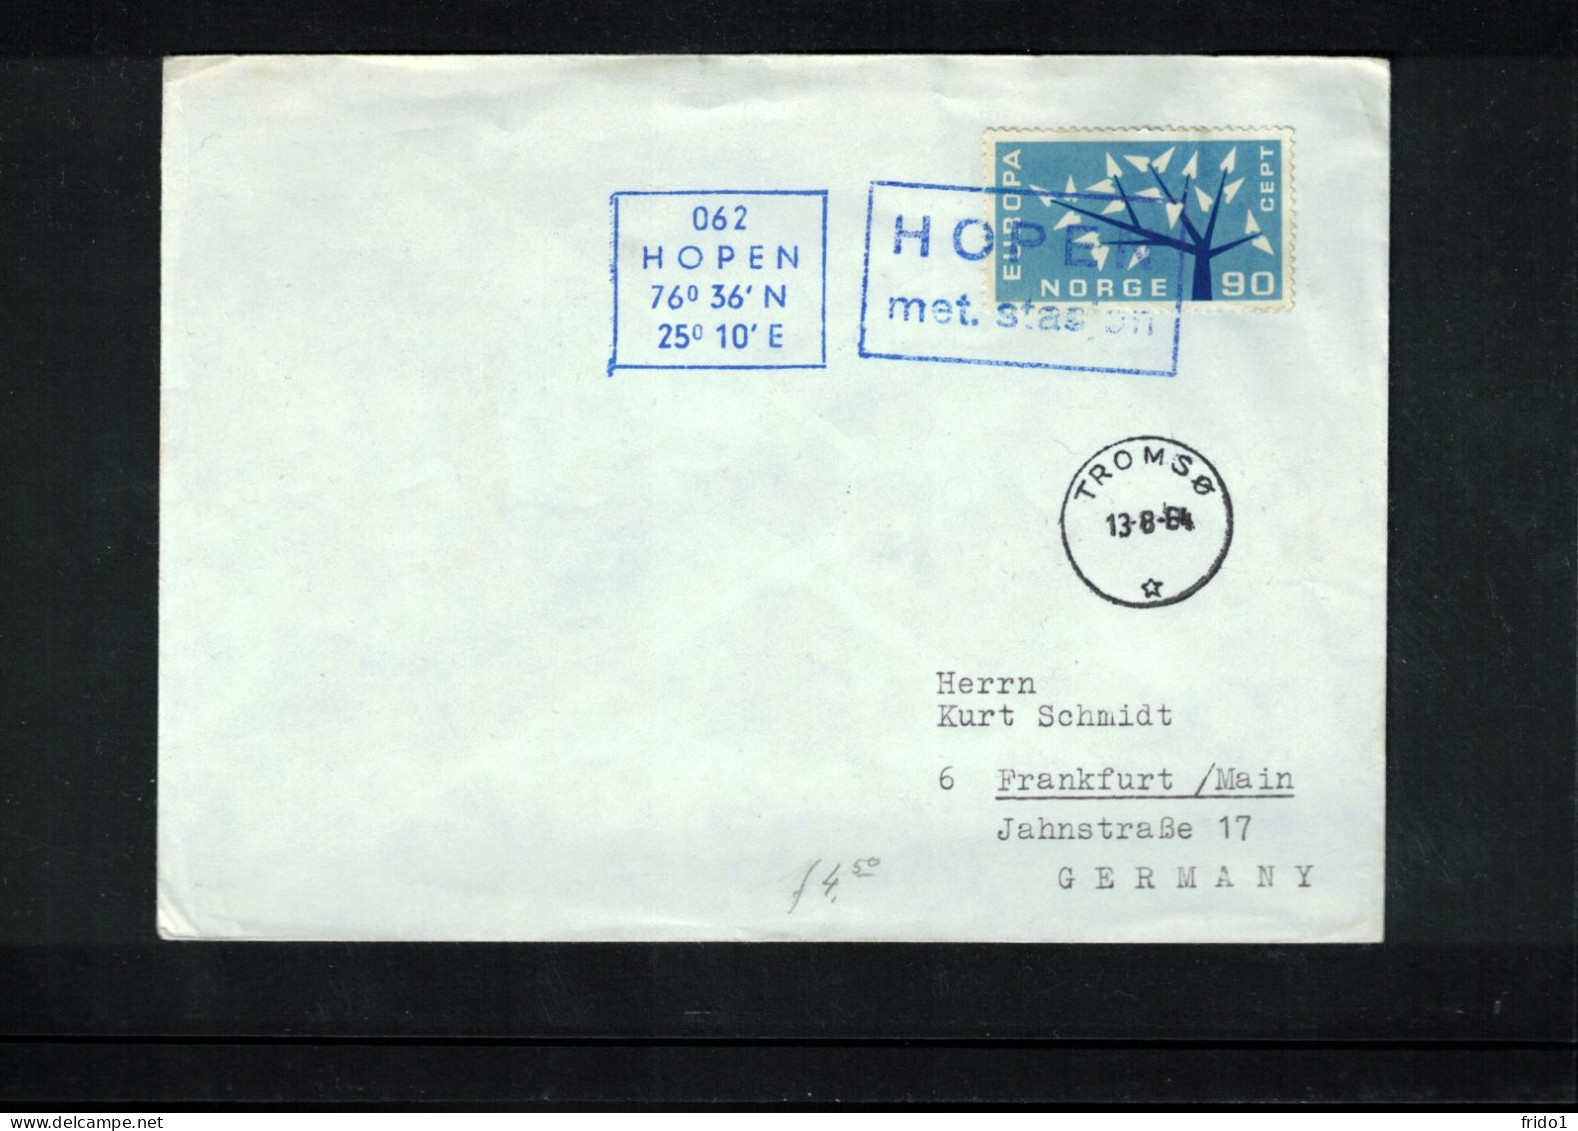 Norway 1964 Svalbard - Hopen Meteorology Station Interesting Letter - Covers & Documents